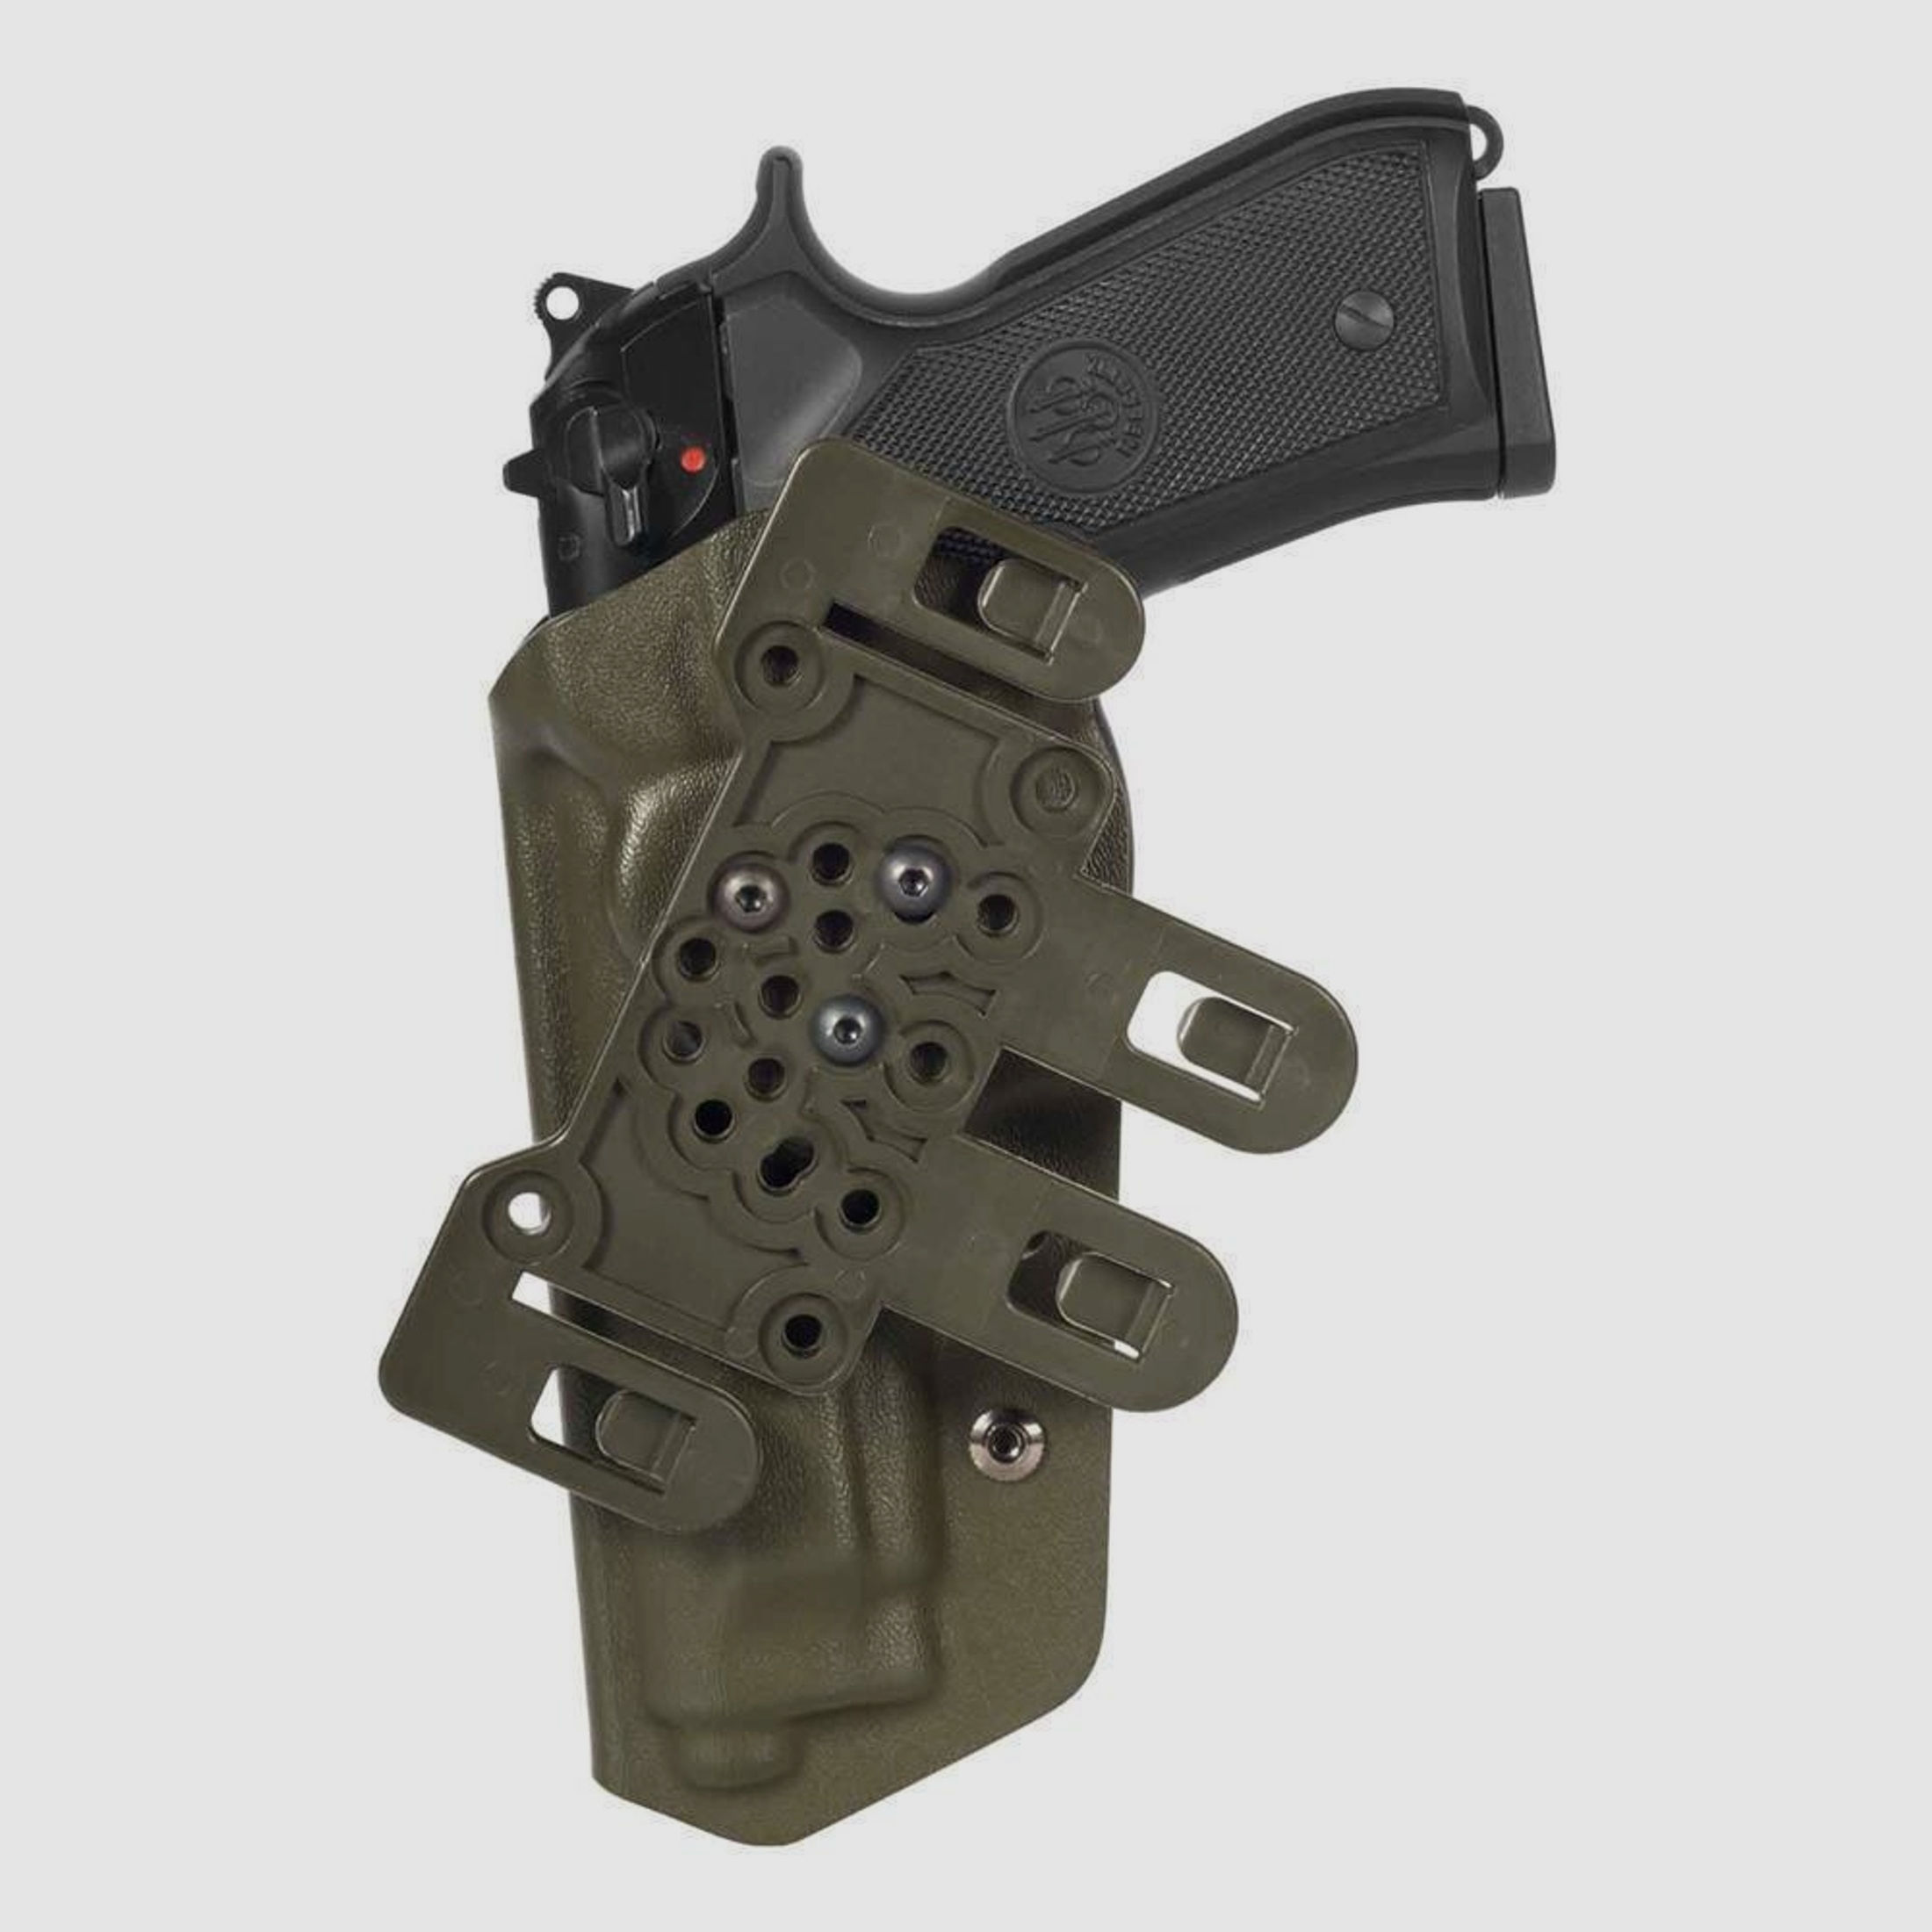 Brustholster mit MOLLE Plattform Beretta PX4 Storm / Compact / 8000-OD Green-Rechtshänder